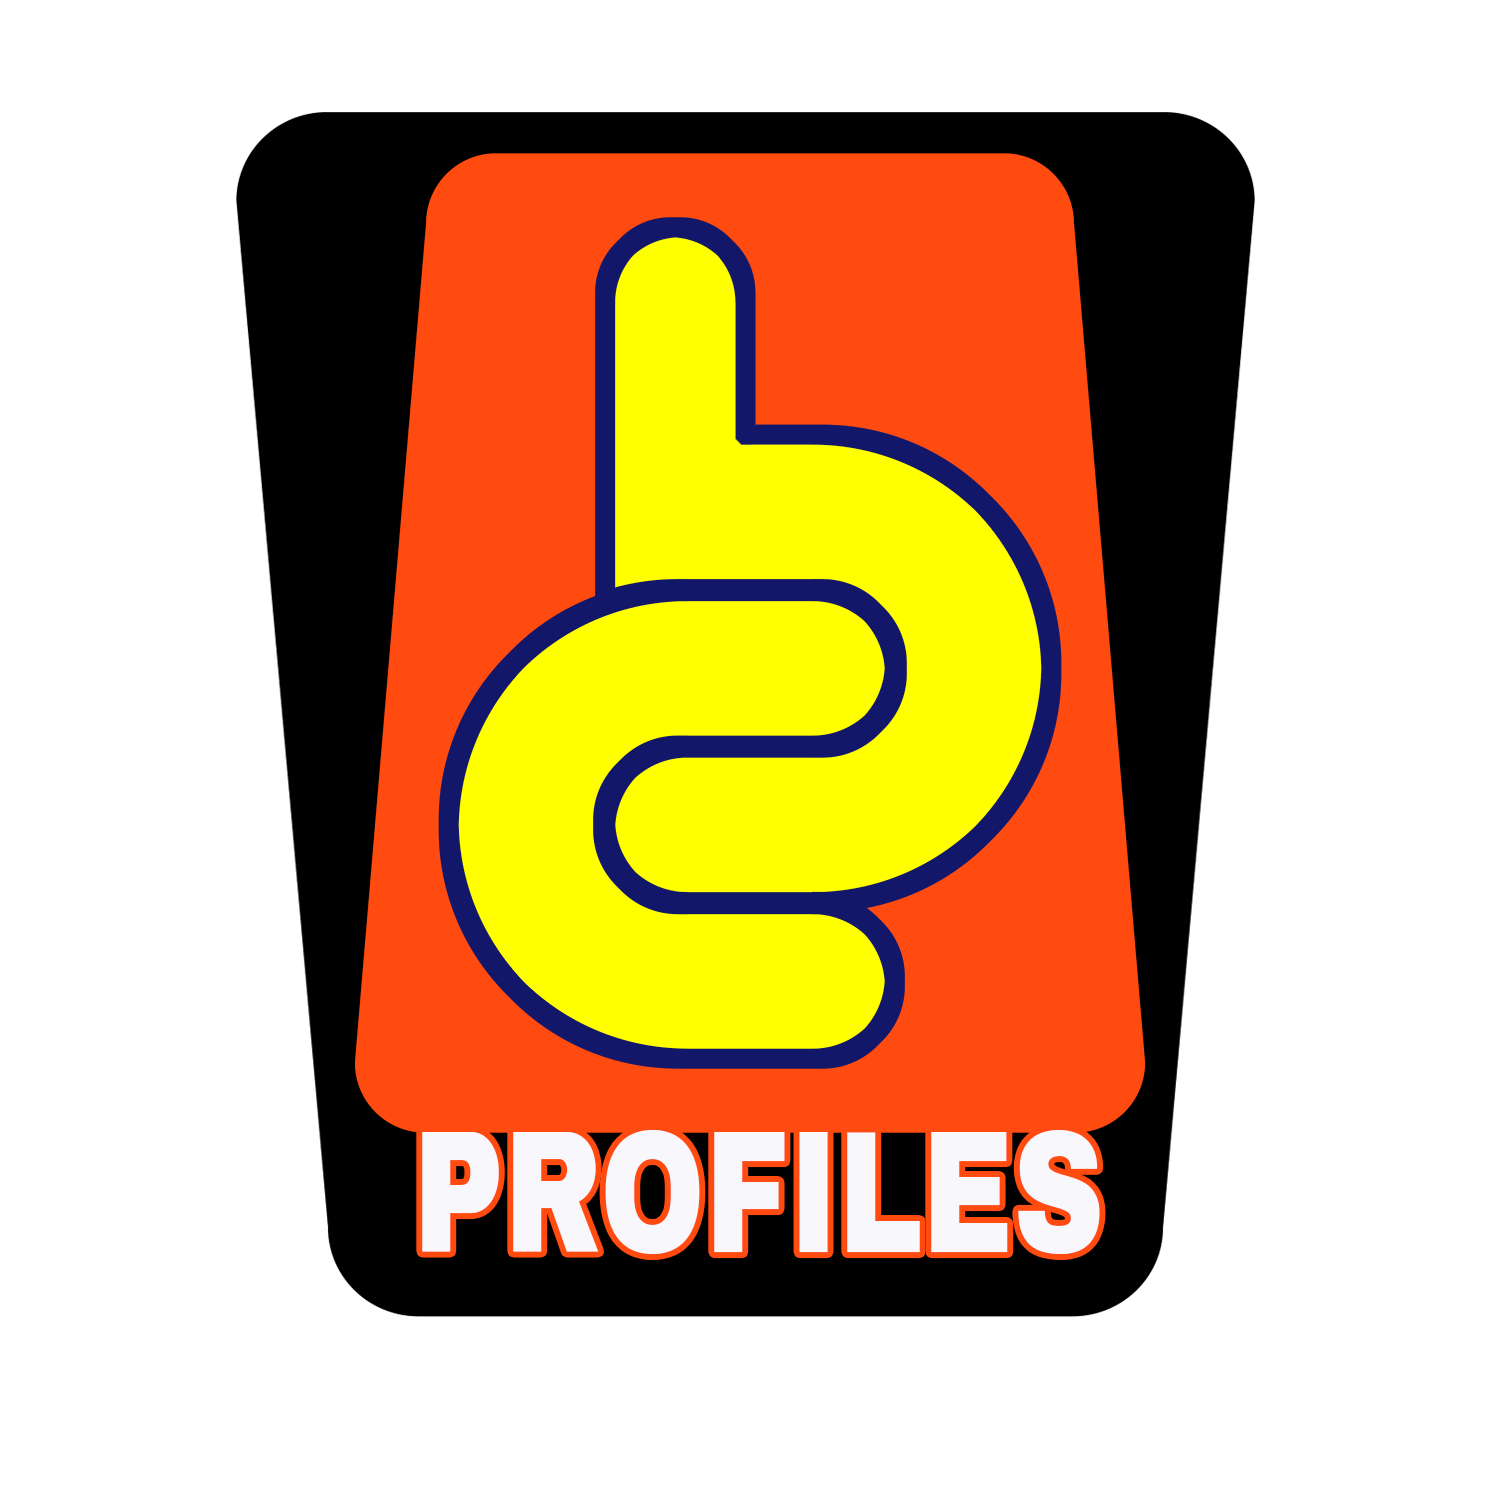 DCO Logo - Upmarket, Modern Logo Design for BC Profiles